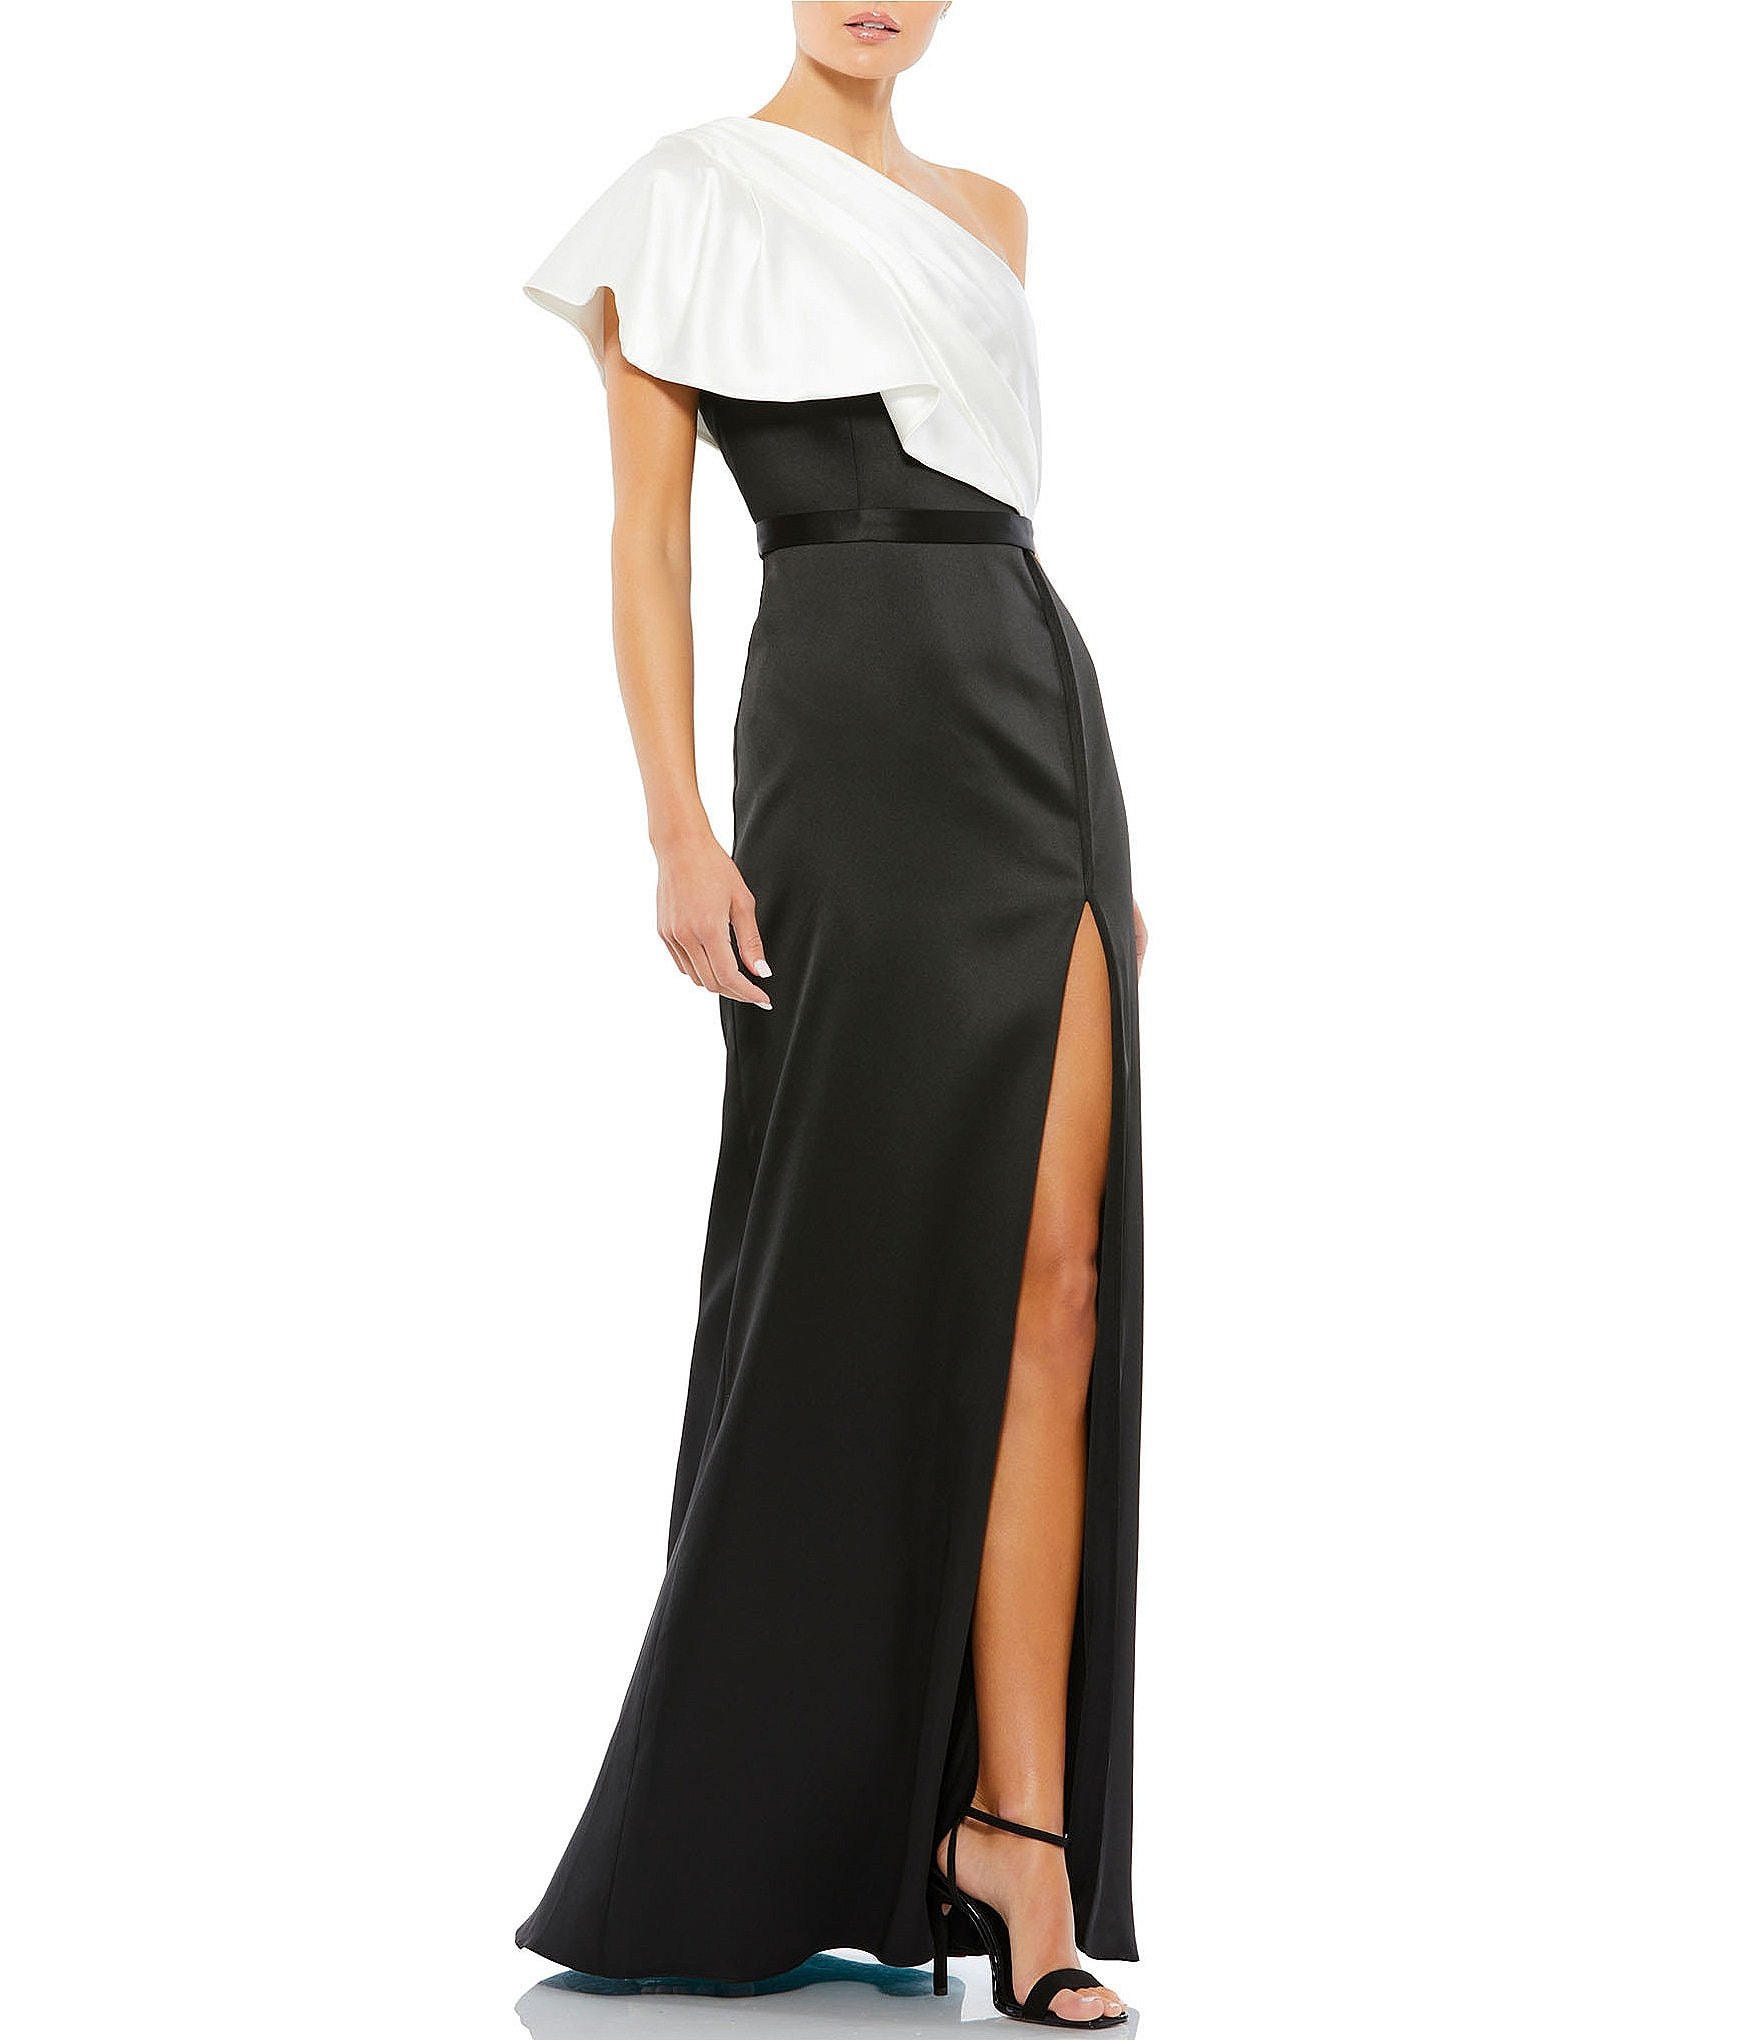 Black And White Lace Semi Formal Dress Tea Length Sleeveless #BLS97028 -  GemGrace.com